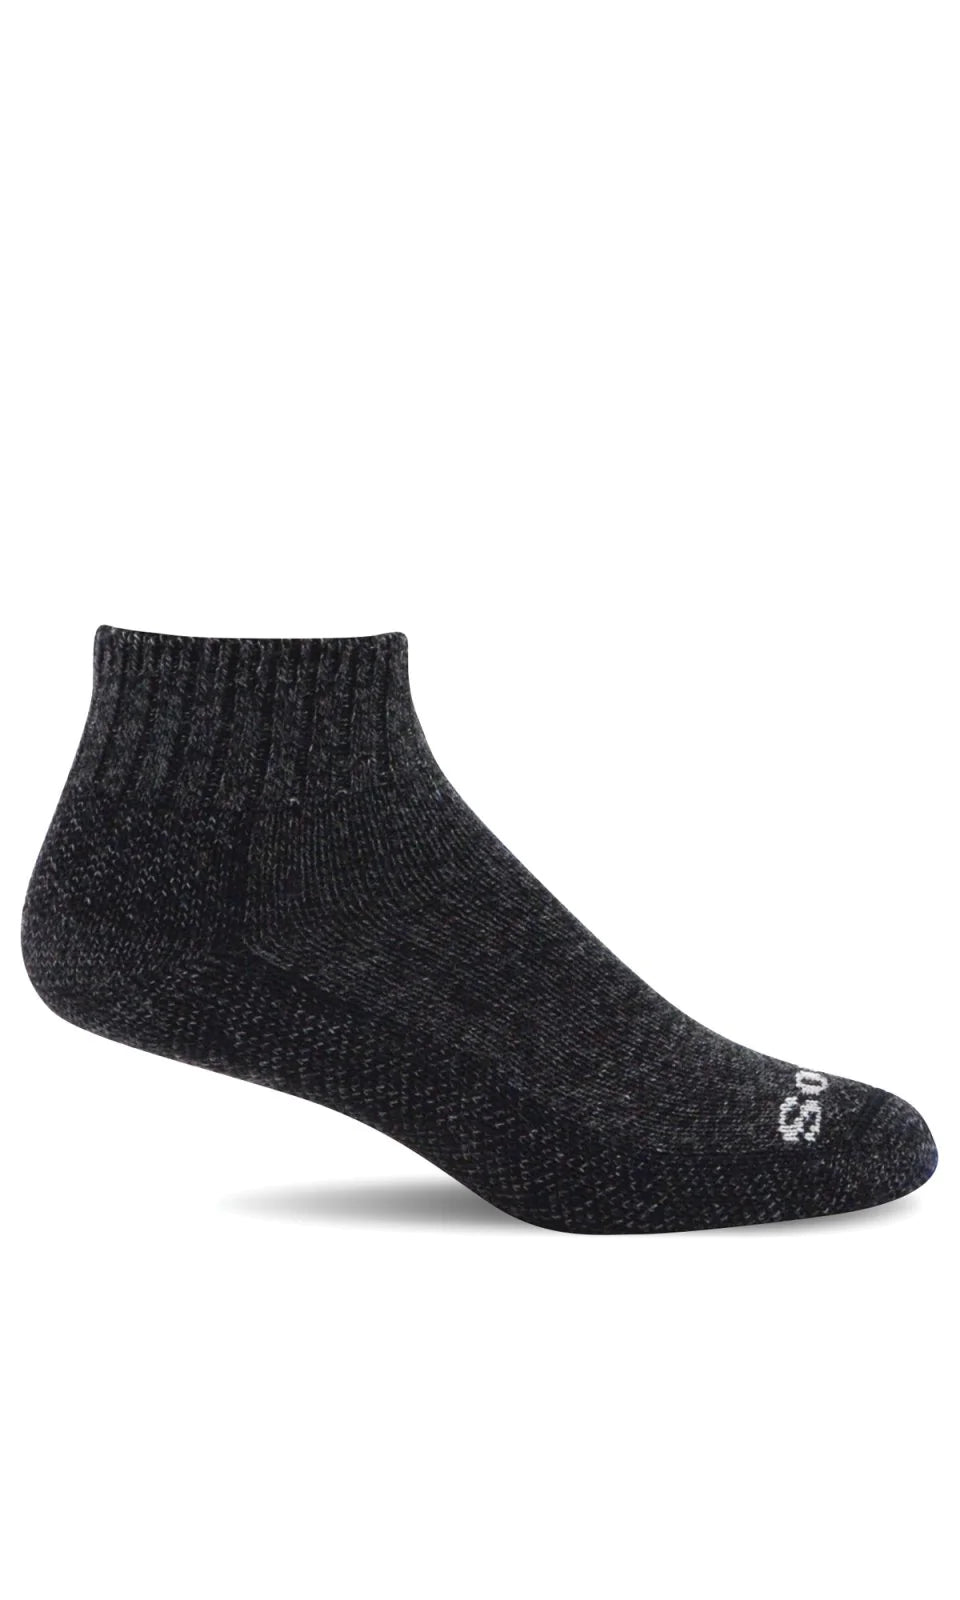 Sockwell Big Easy Mini Relaxed Fit Socks (Women's)